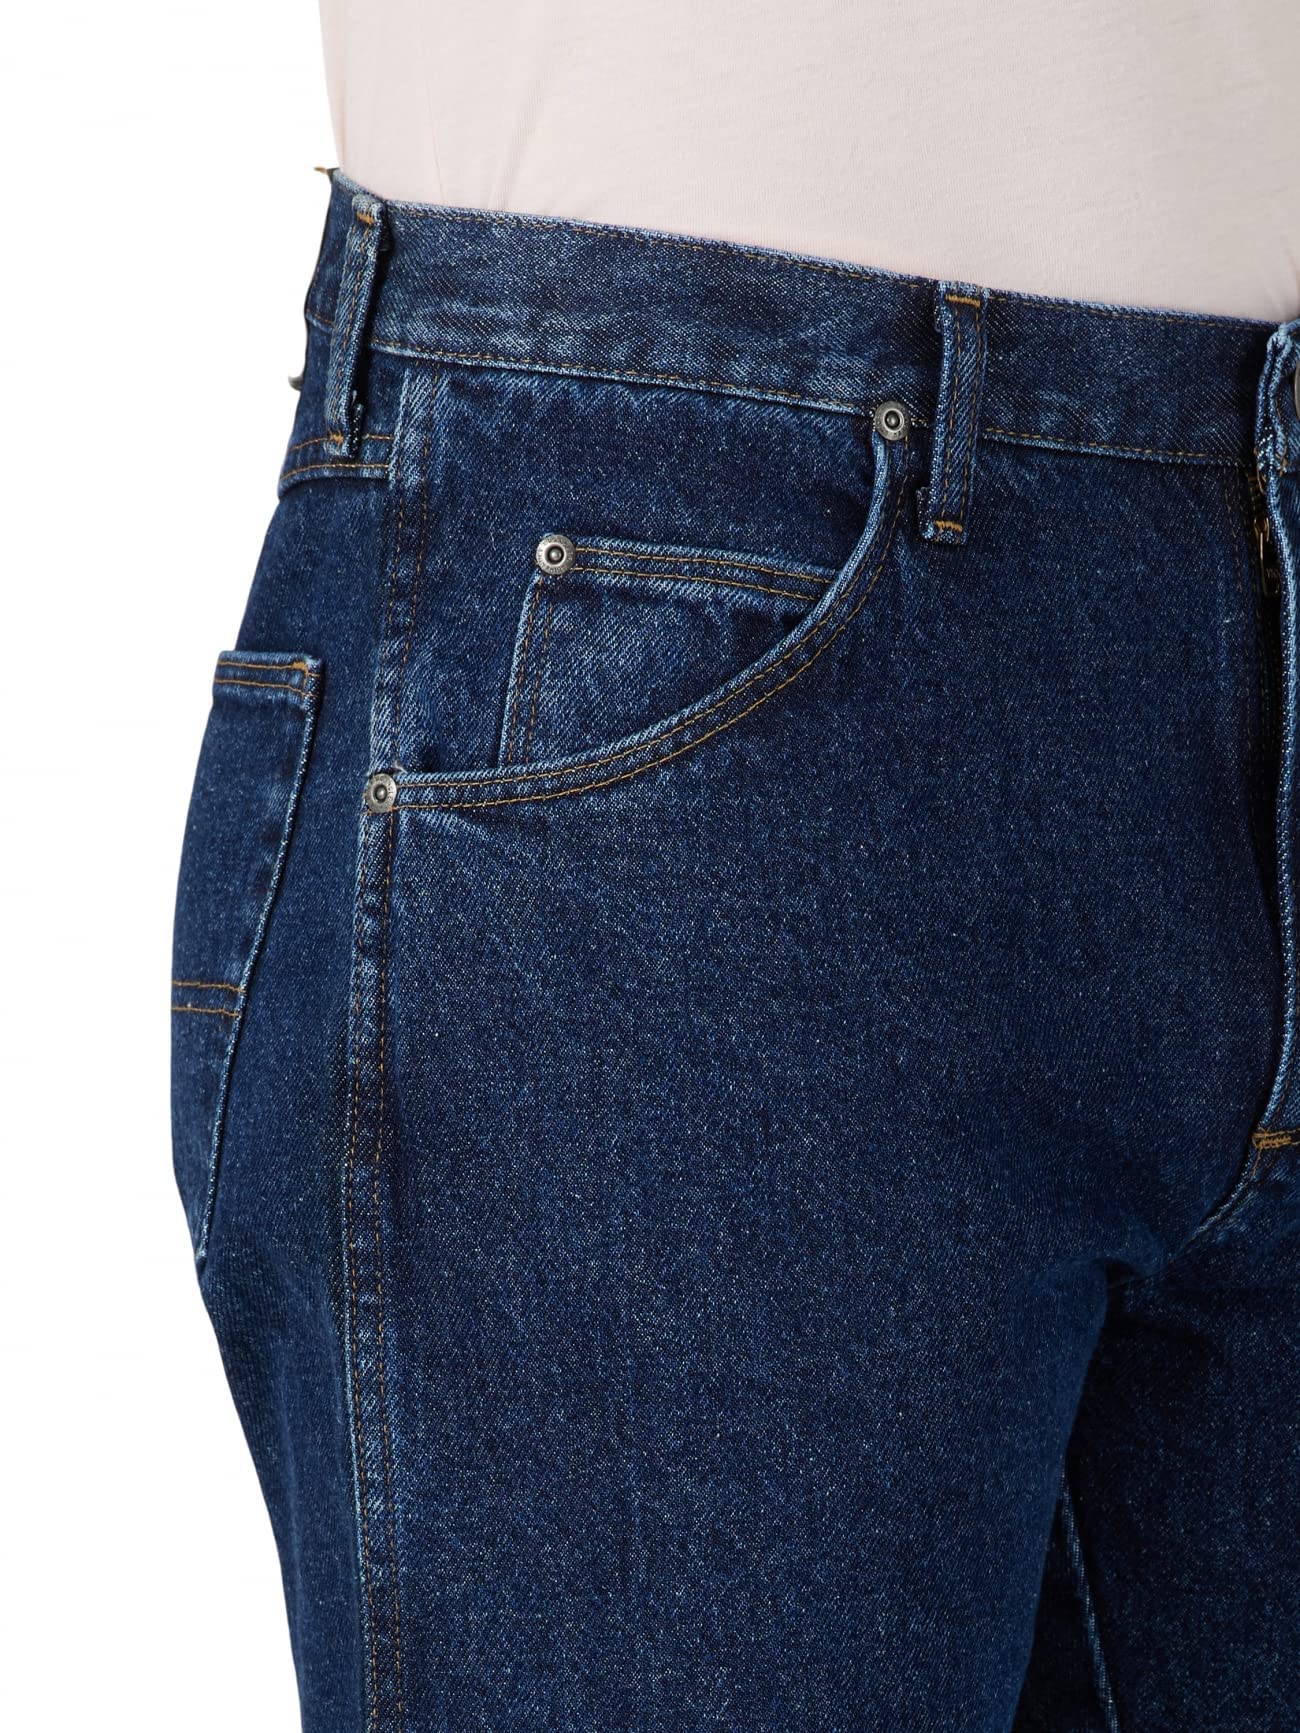 Wrangler Authentics Men's Classic 5-Pocket Regular Fit Cotton Jean, Dark Rinse, 42W x 34L